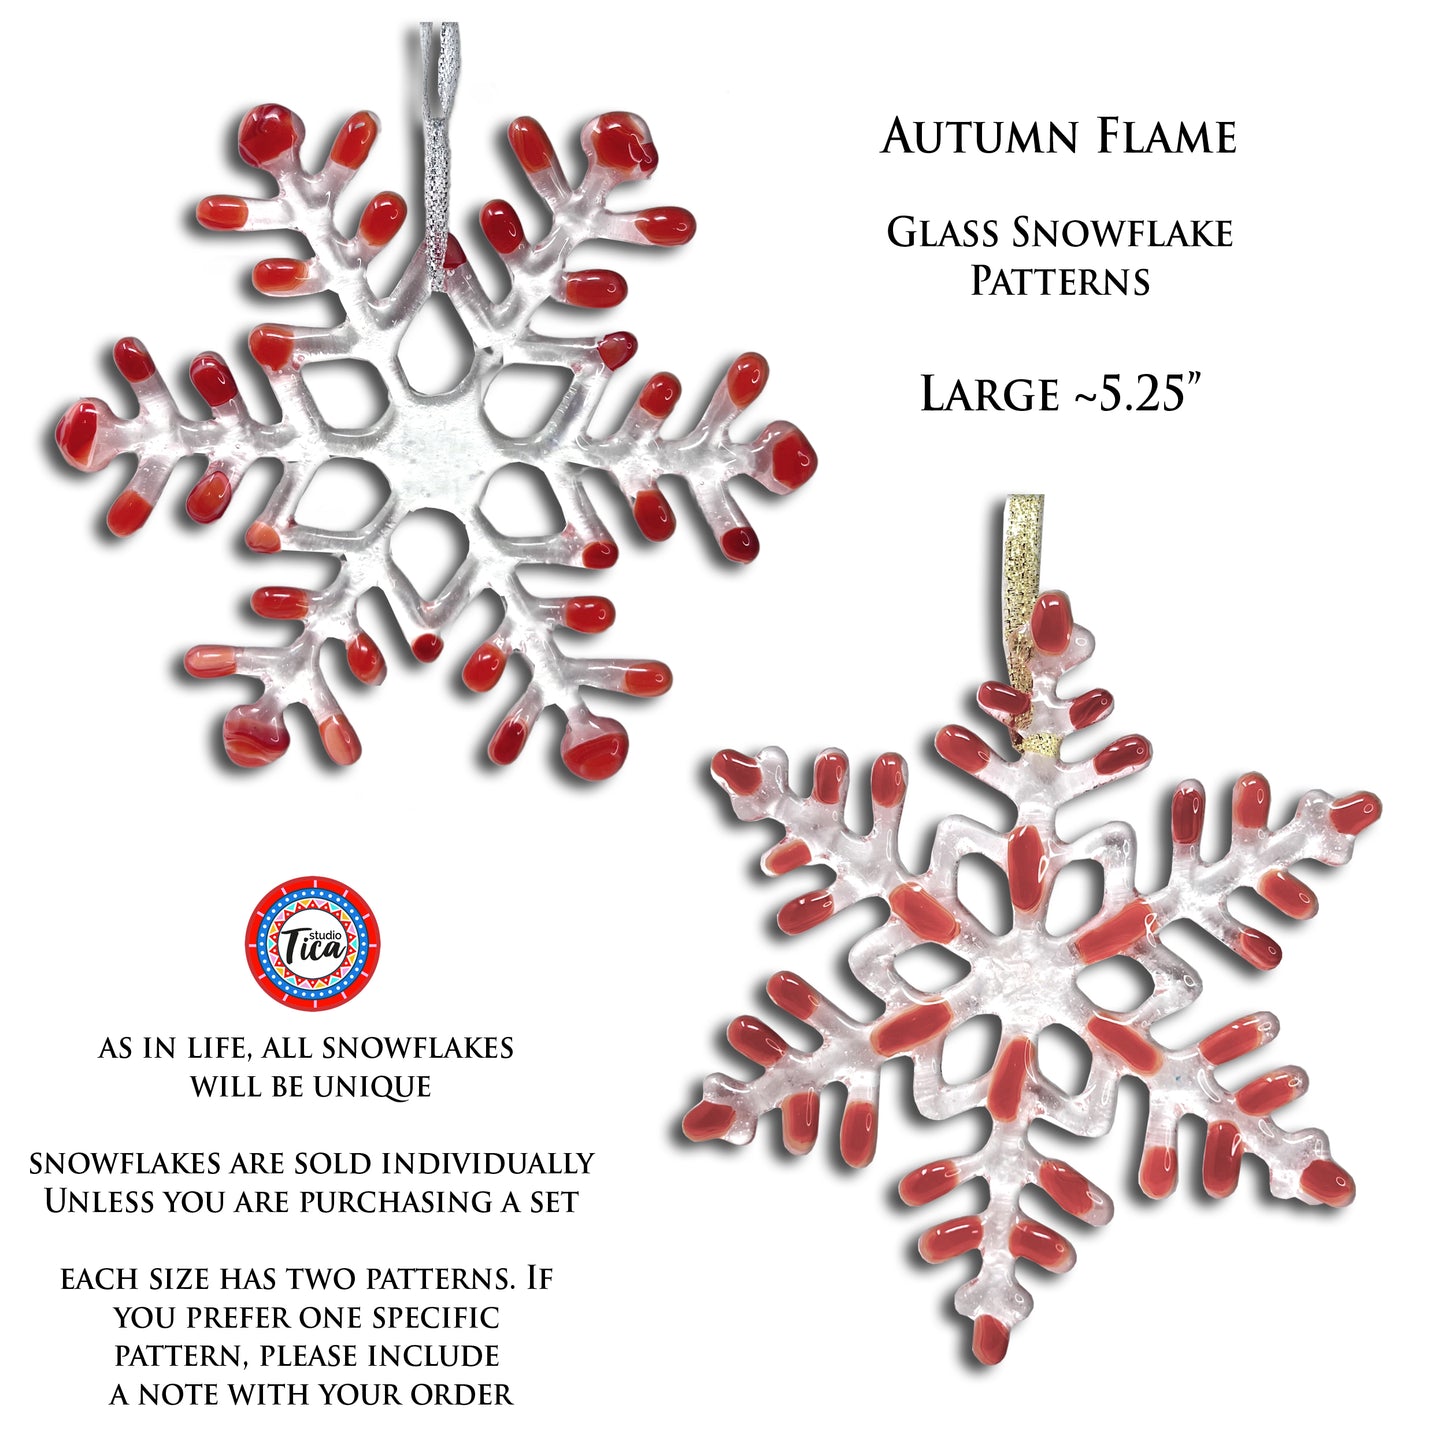 studioTica Autumn Flame - Handmade Glass Snowflakes